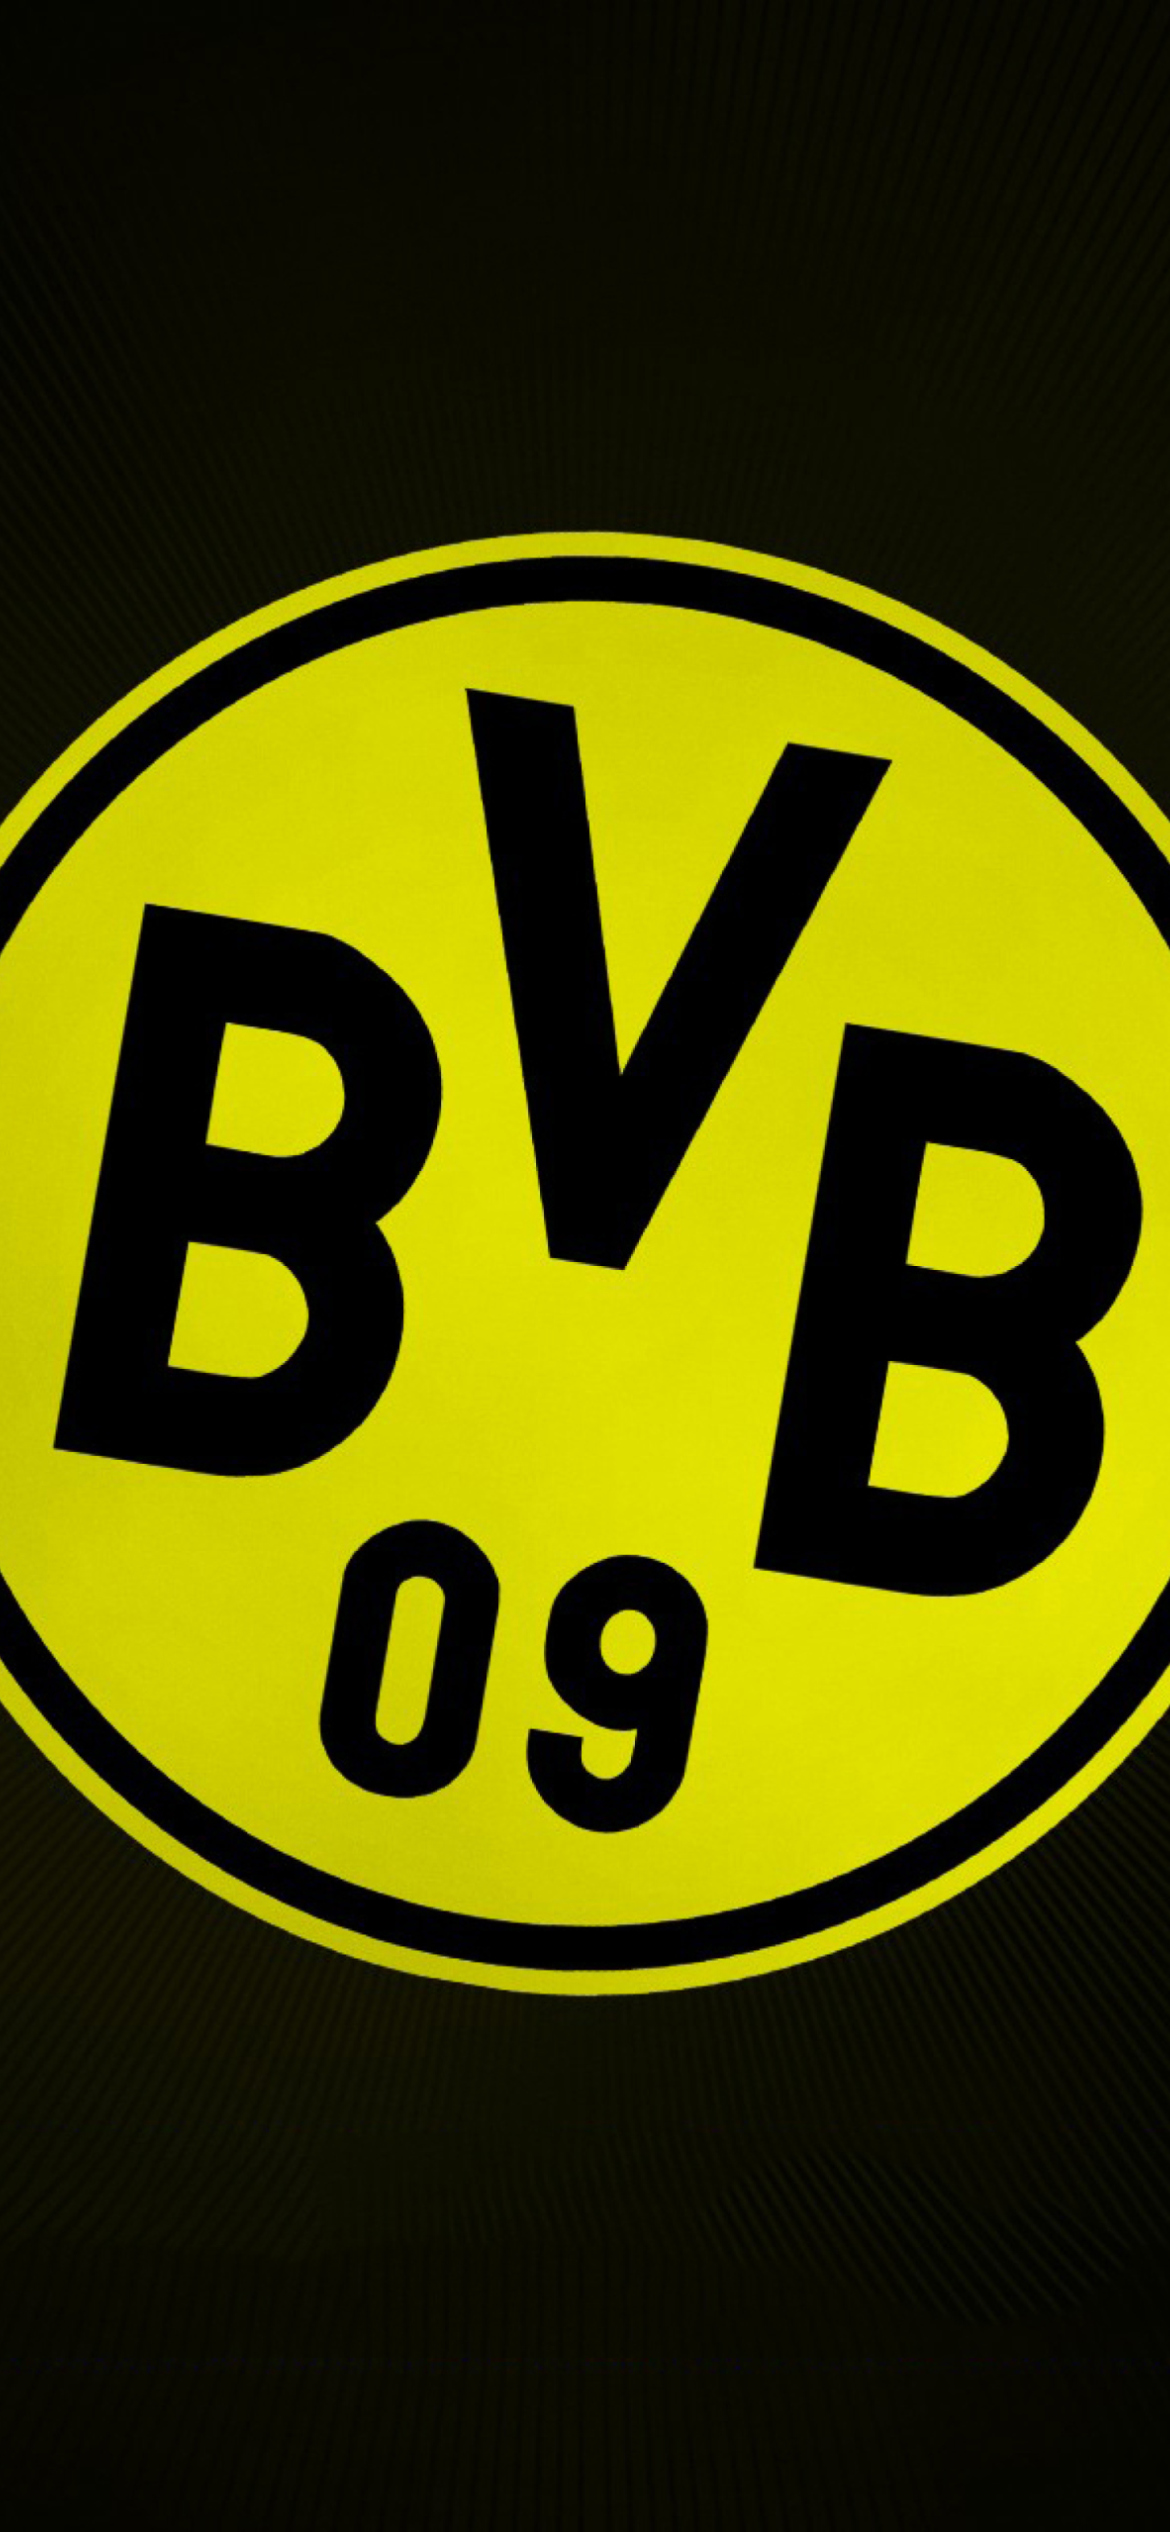 Das Borussia Dortmund - BVB Wallpaper 1170x2532